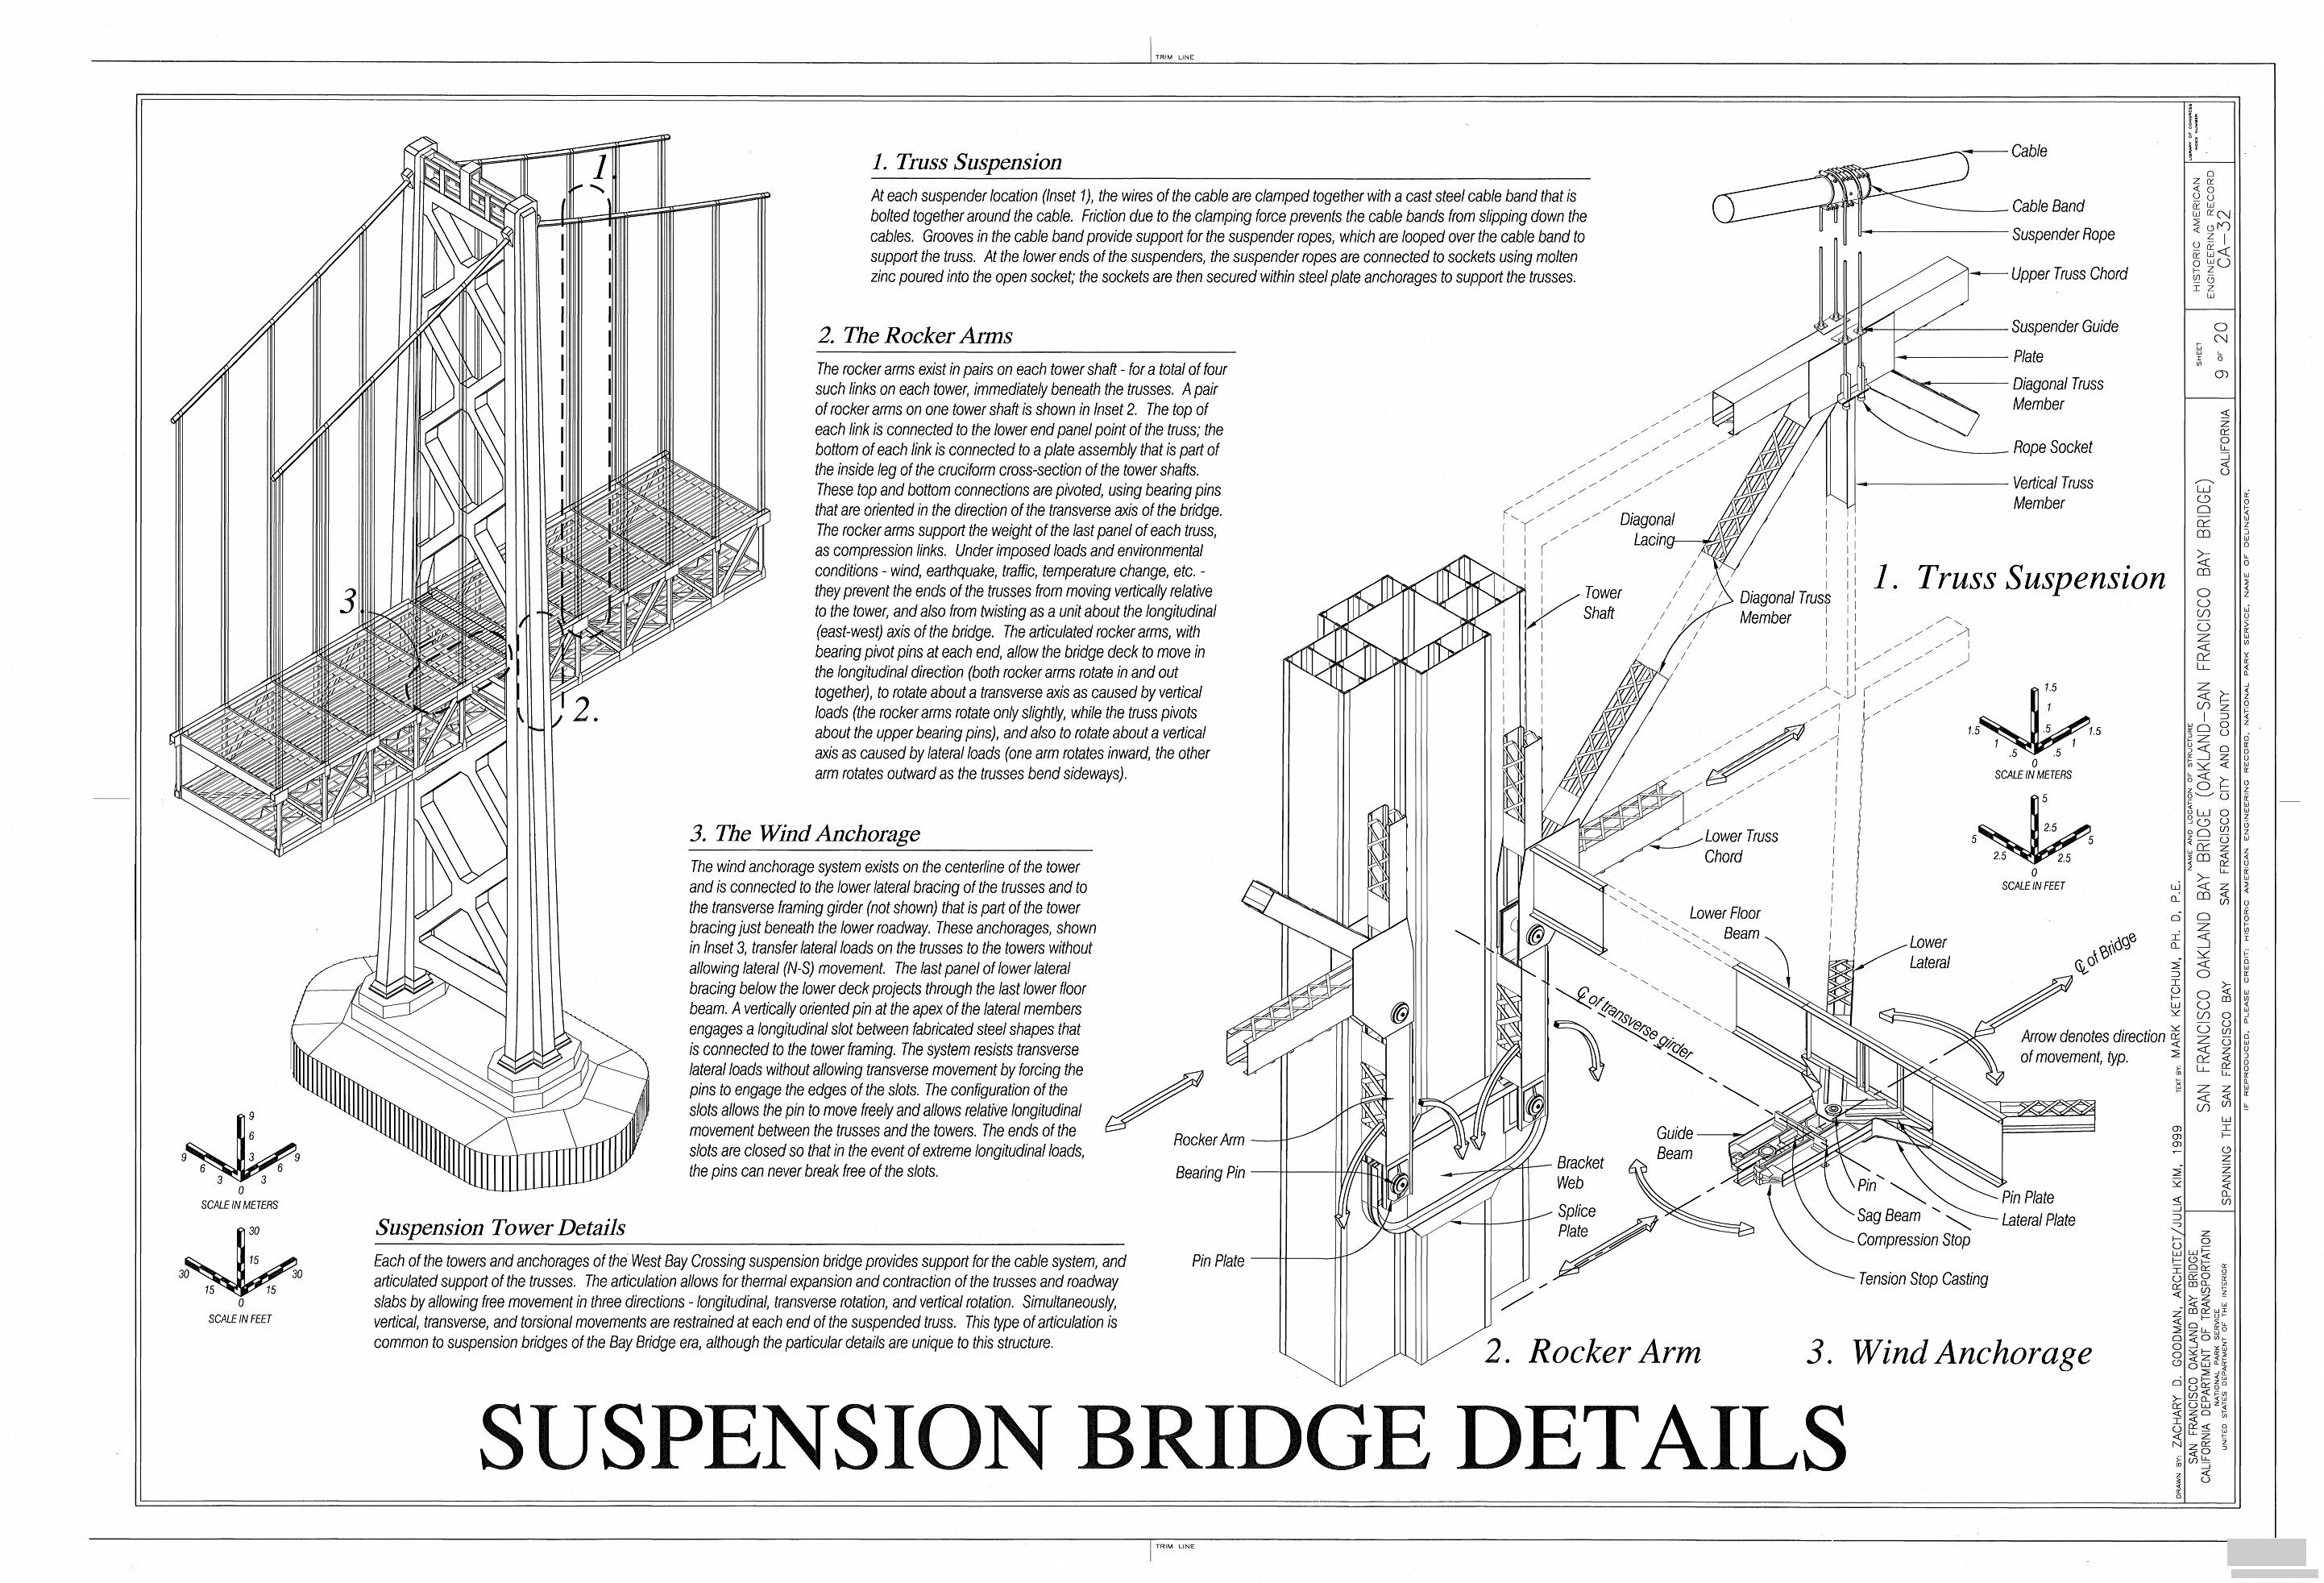 Suspension_Bridge_Details_-_San_Francisco_Oakland_Bay_Bridge,_Spanning_San_Franc.png